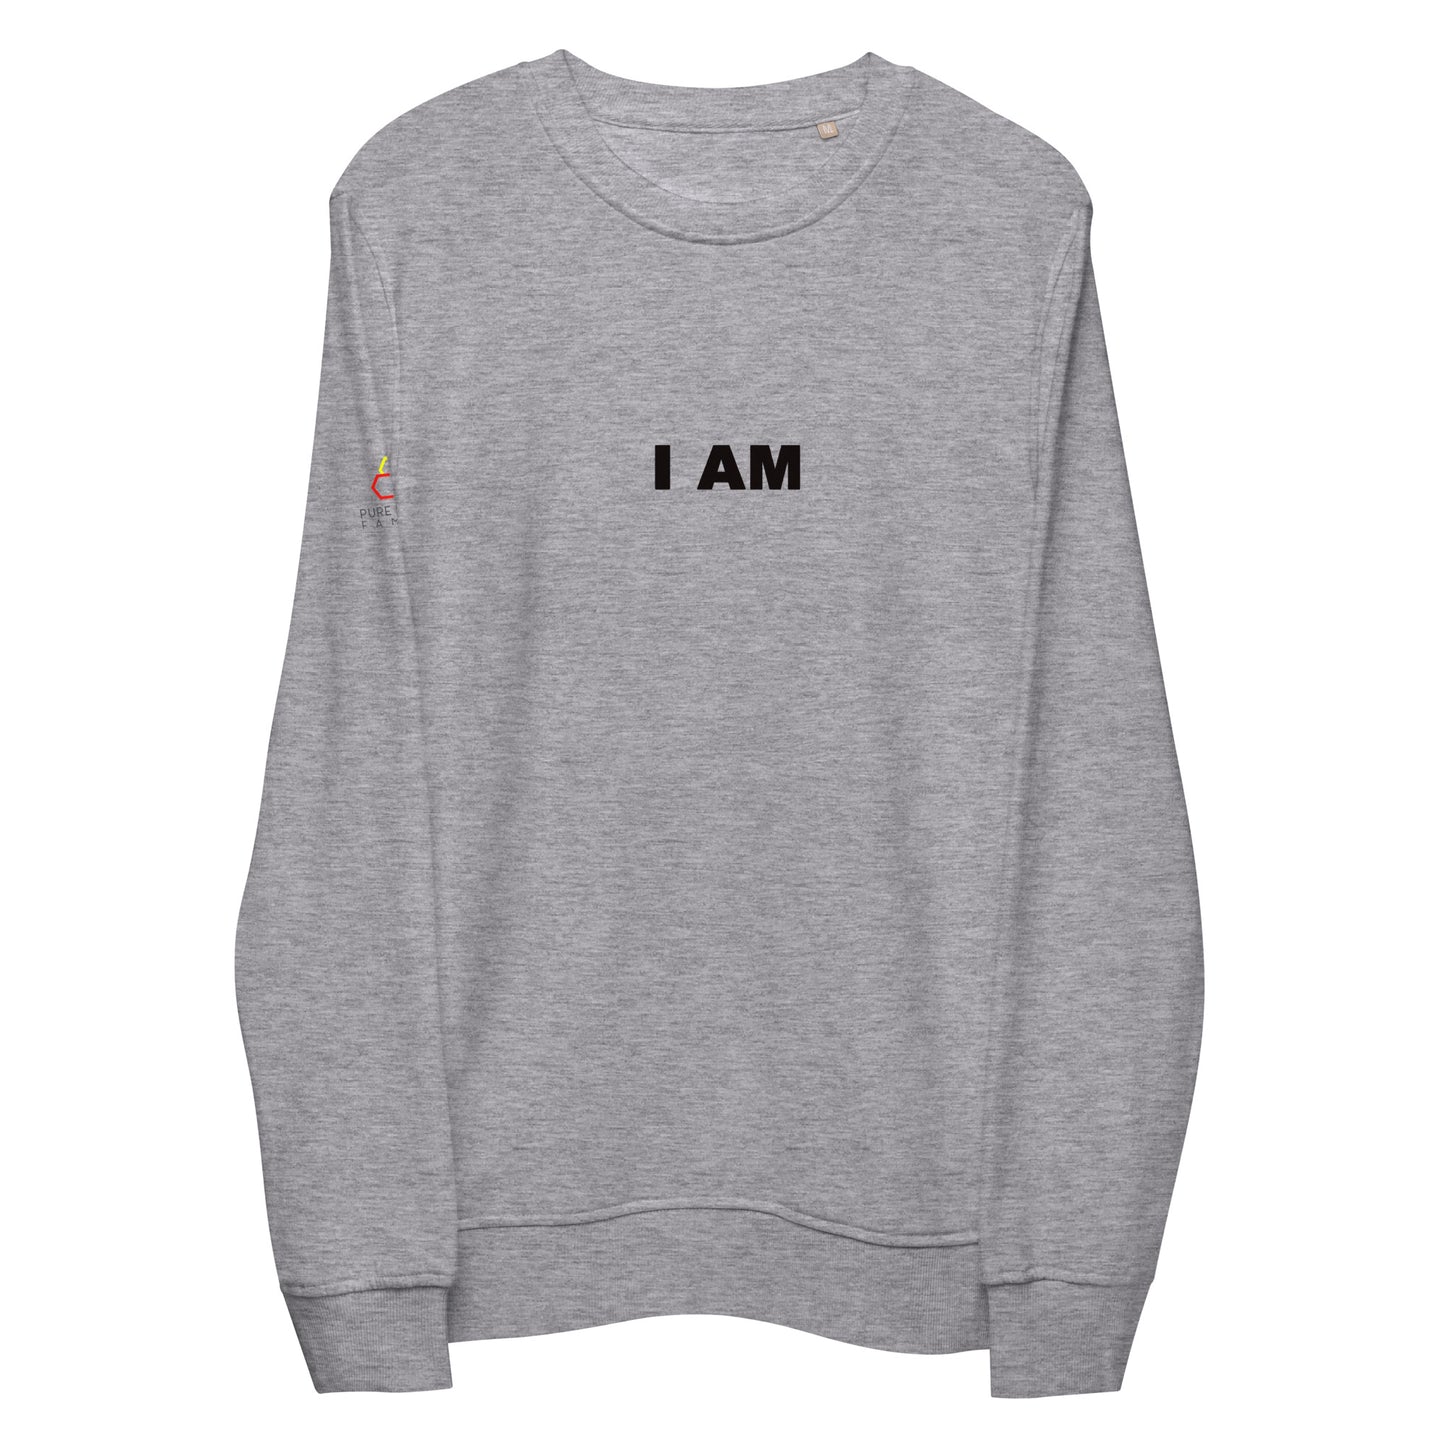 I AM - Unisex organic sweatshirt